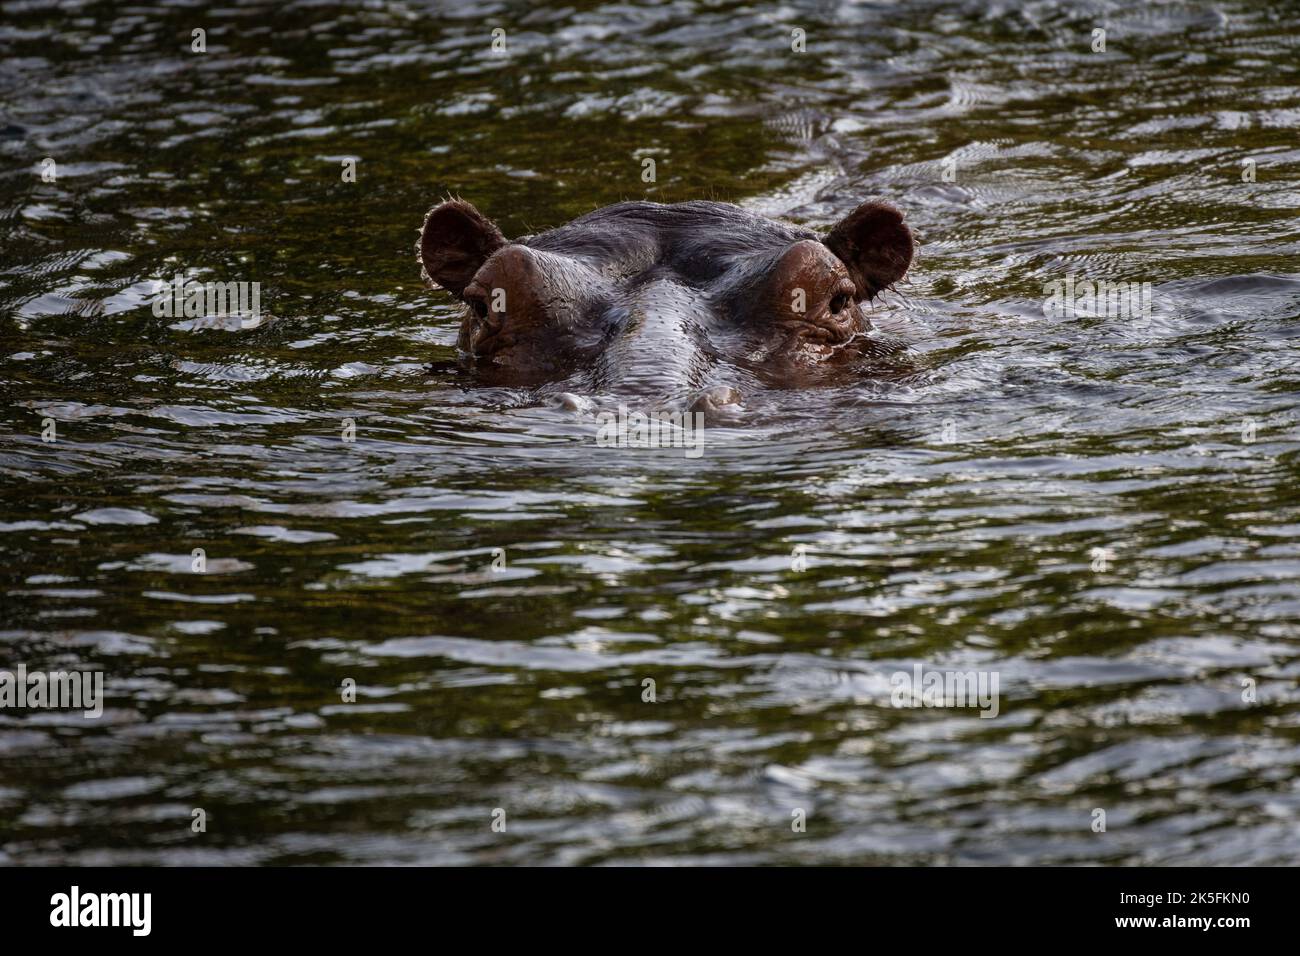 Hippo, Hippopotamus anphibius, Hippopotamidae, Tsavo East National Park, Kenya, Africa Stock Photo